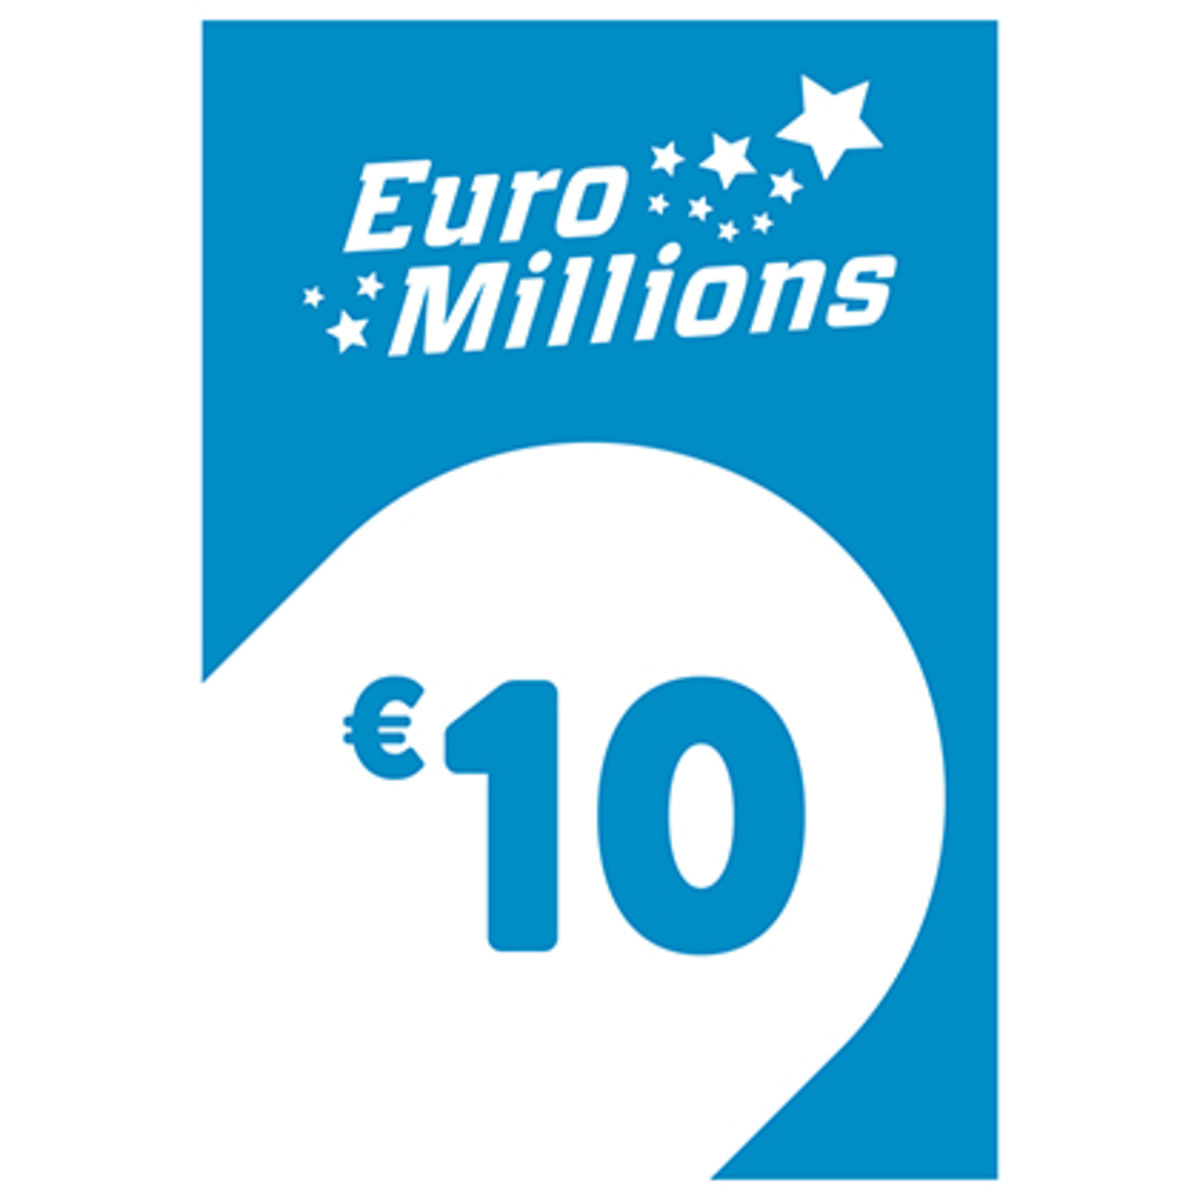 Euromillions 10 €